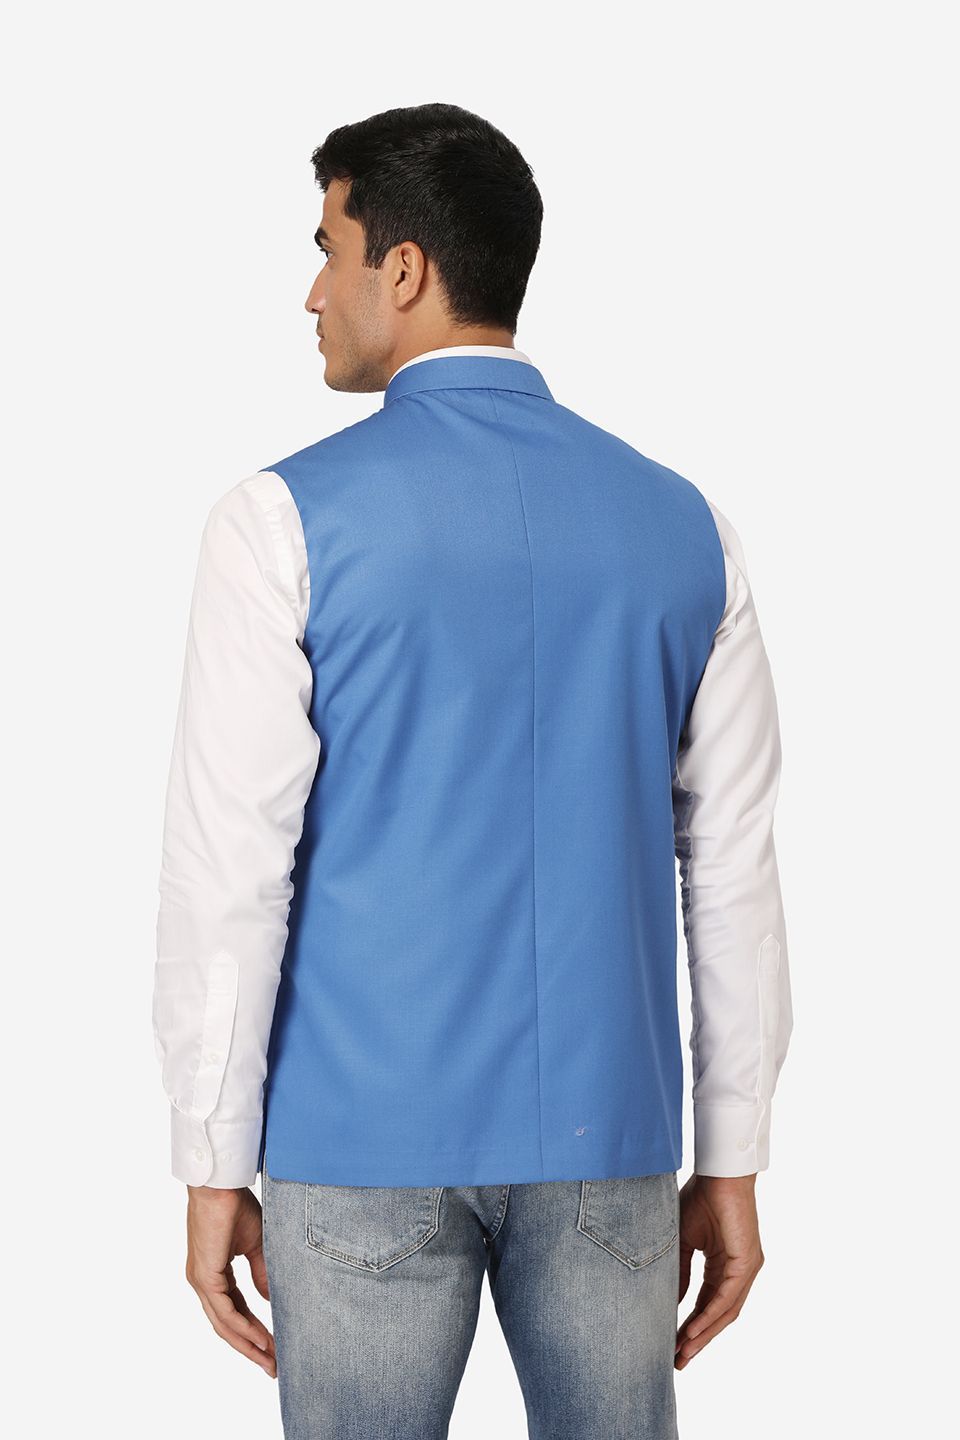 Wintage Men's Poly Cotton Festive and Casual Nehru Jacket Vest Waistcoat : Light Blue